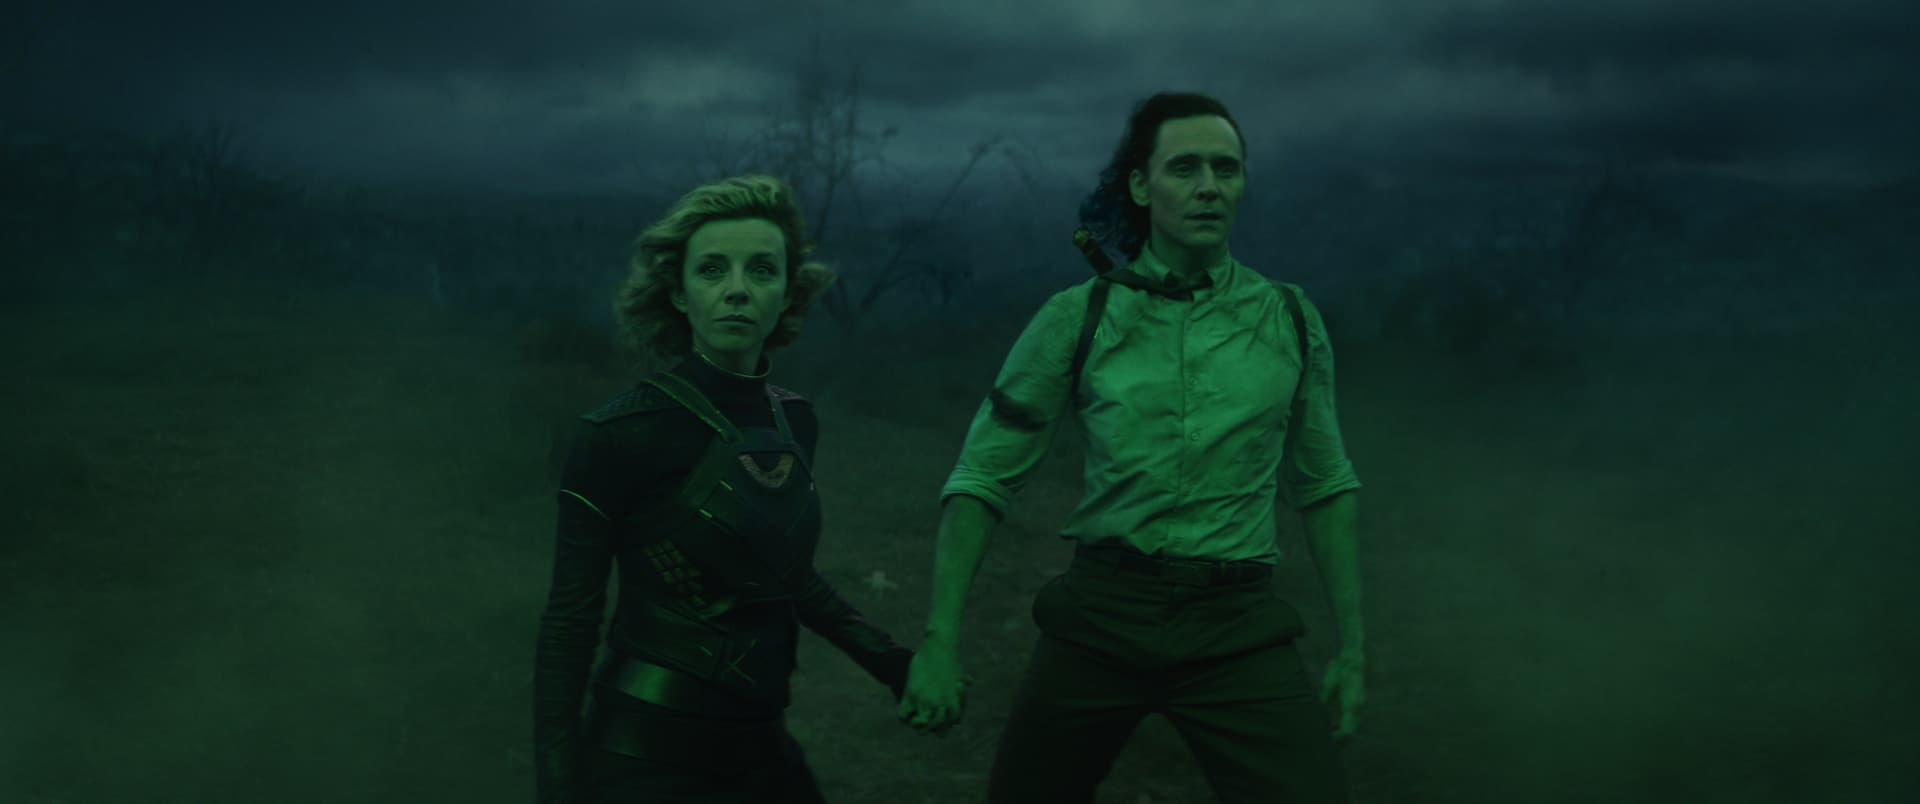 Loki and Sylvie